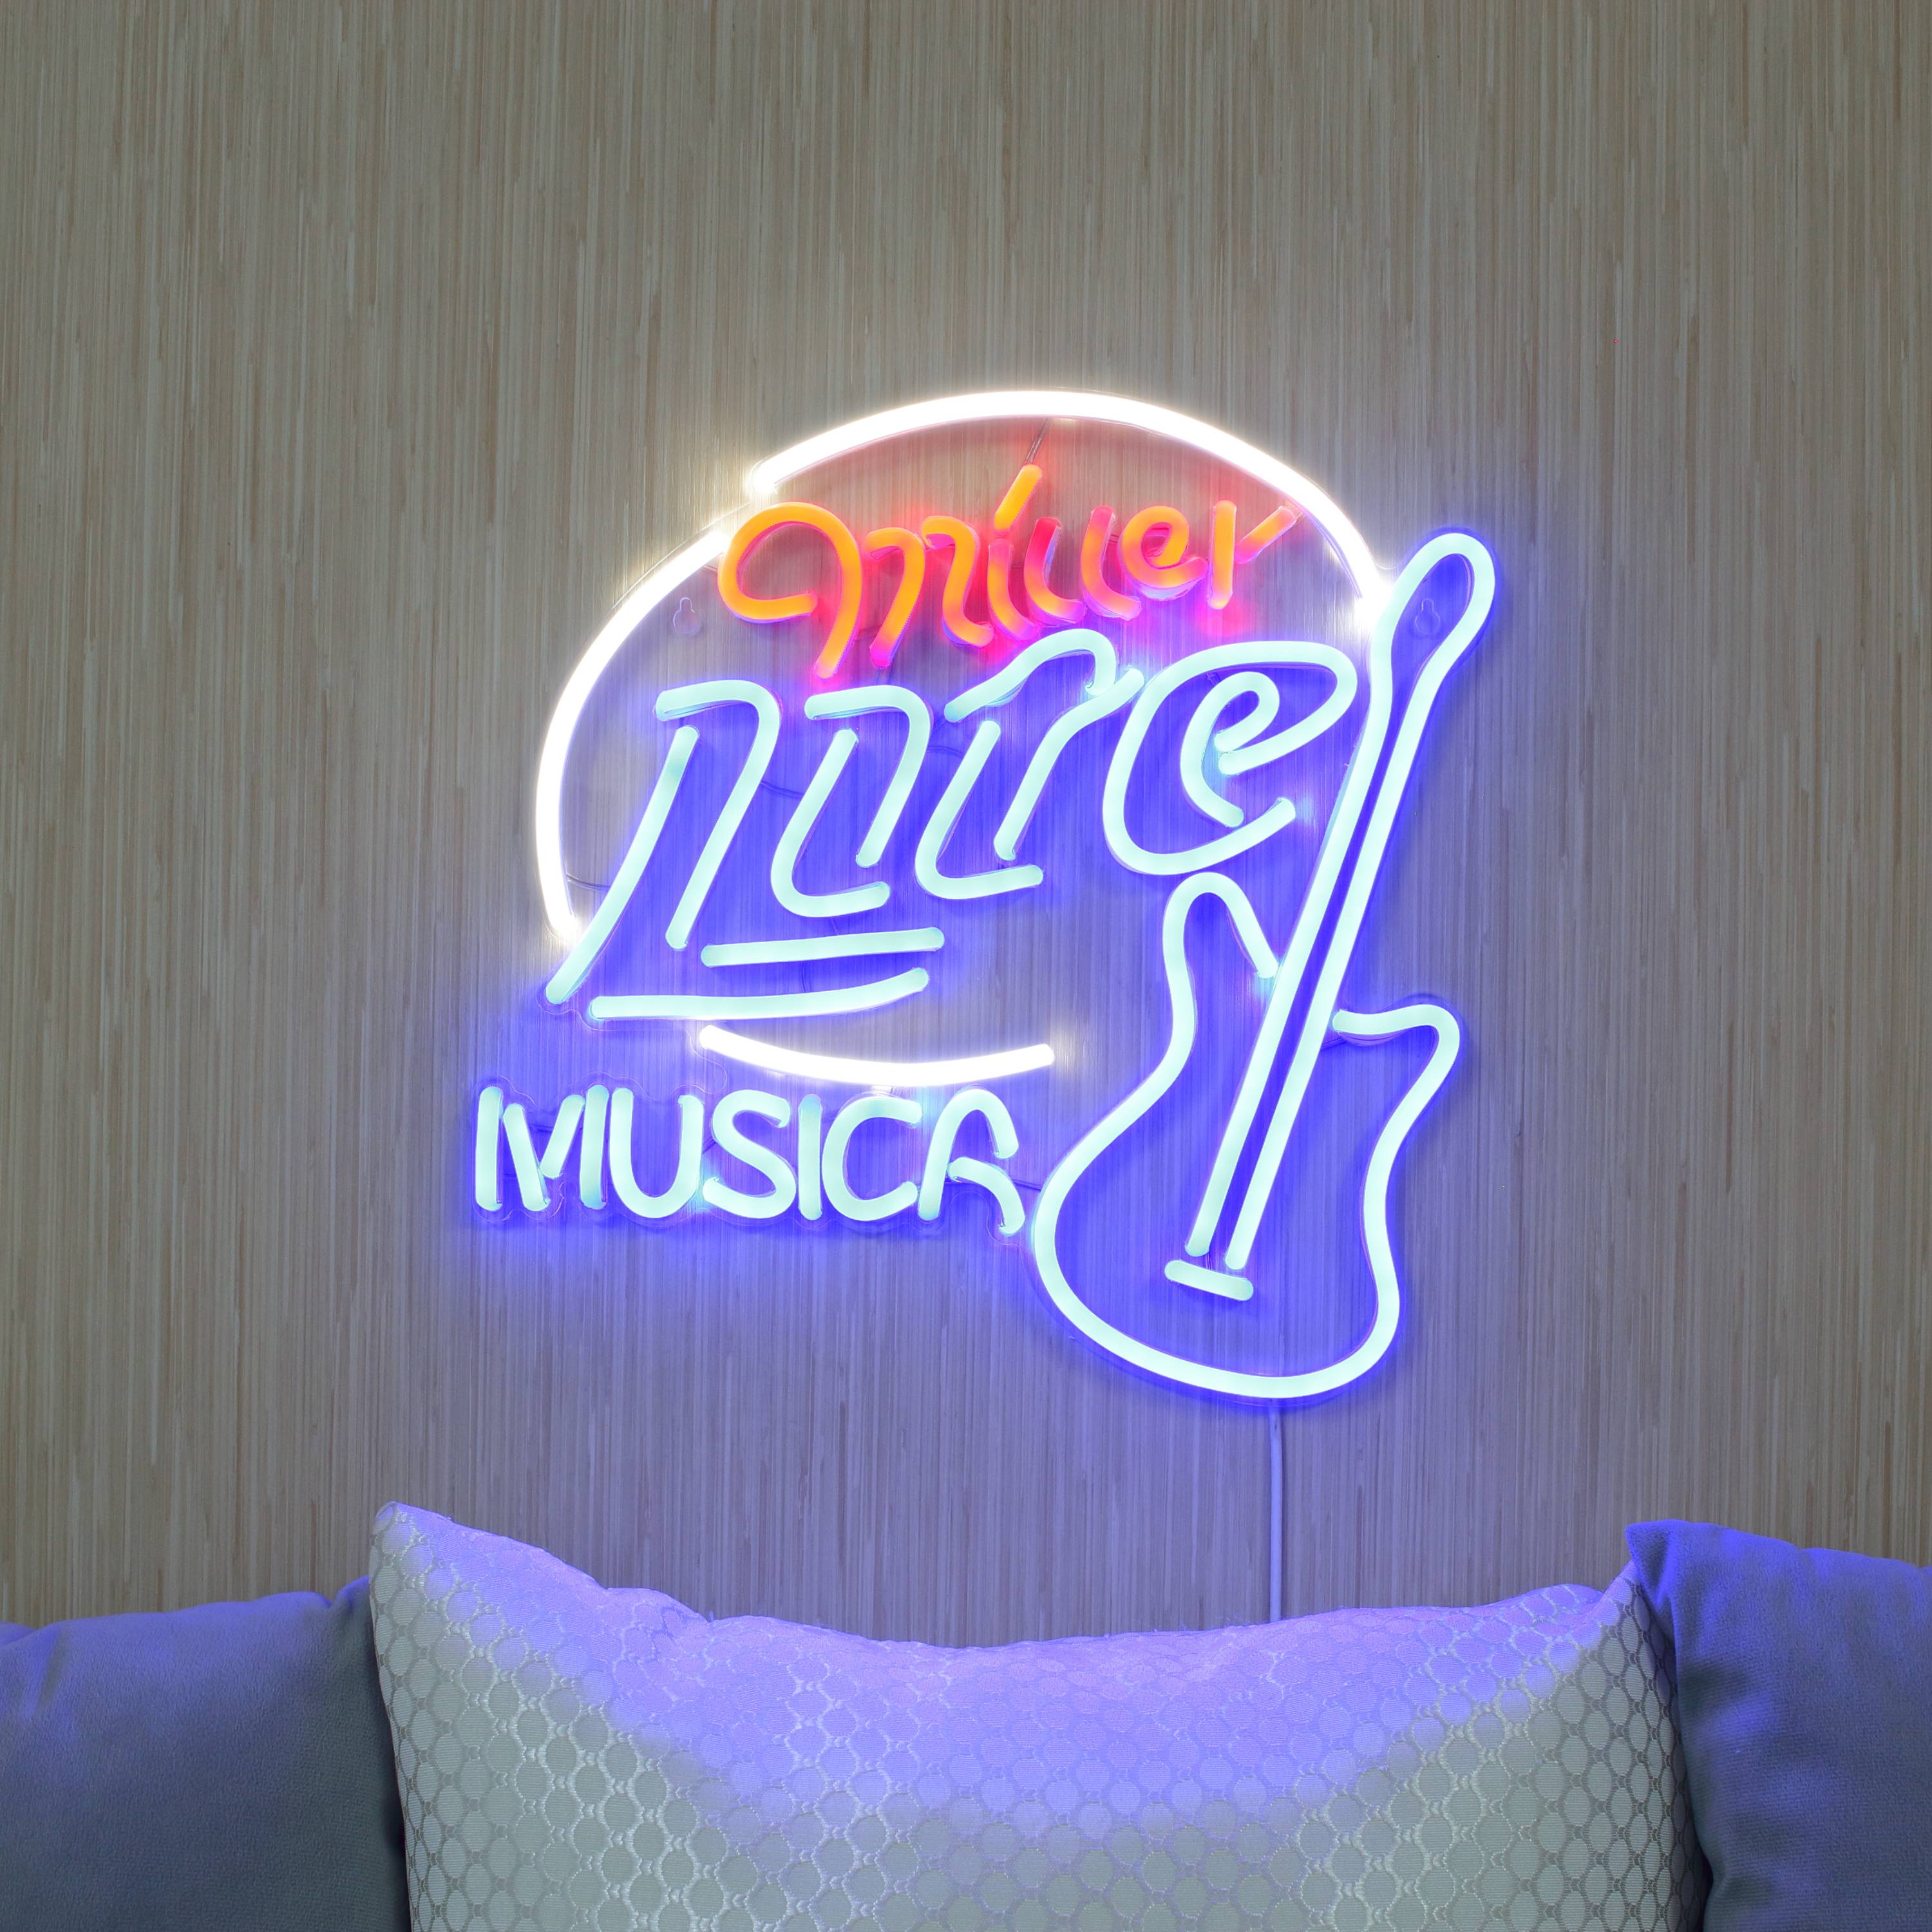 Miller Lite Musica Large Flex Neon LED Sign